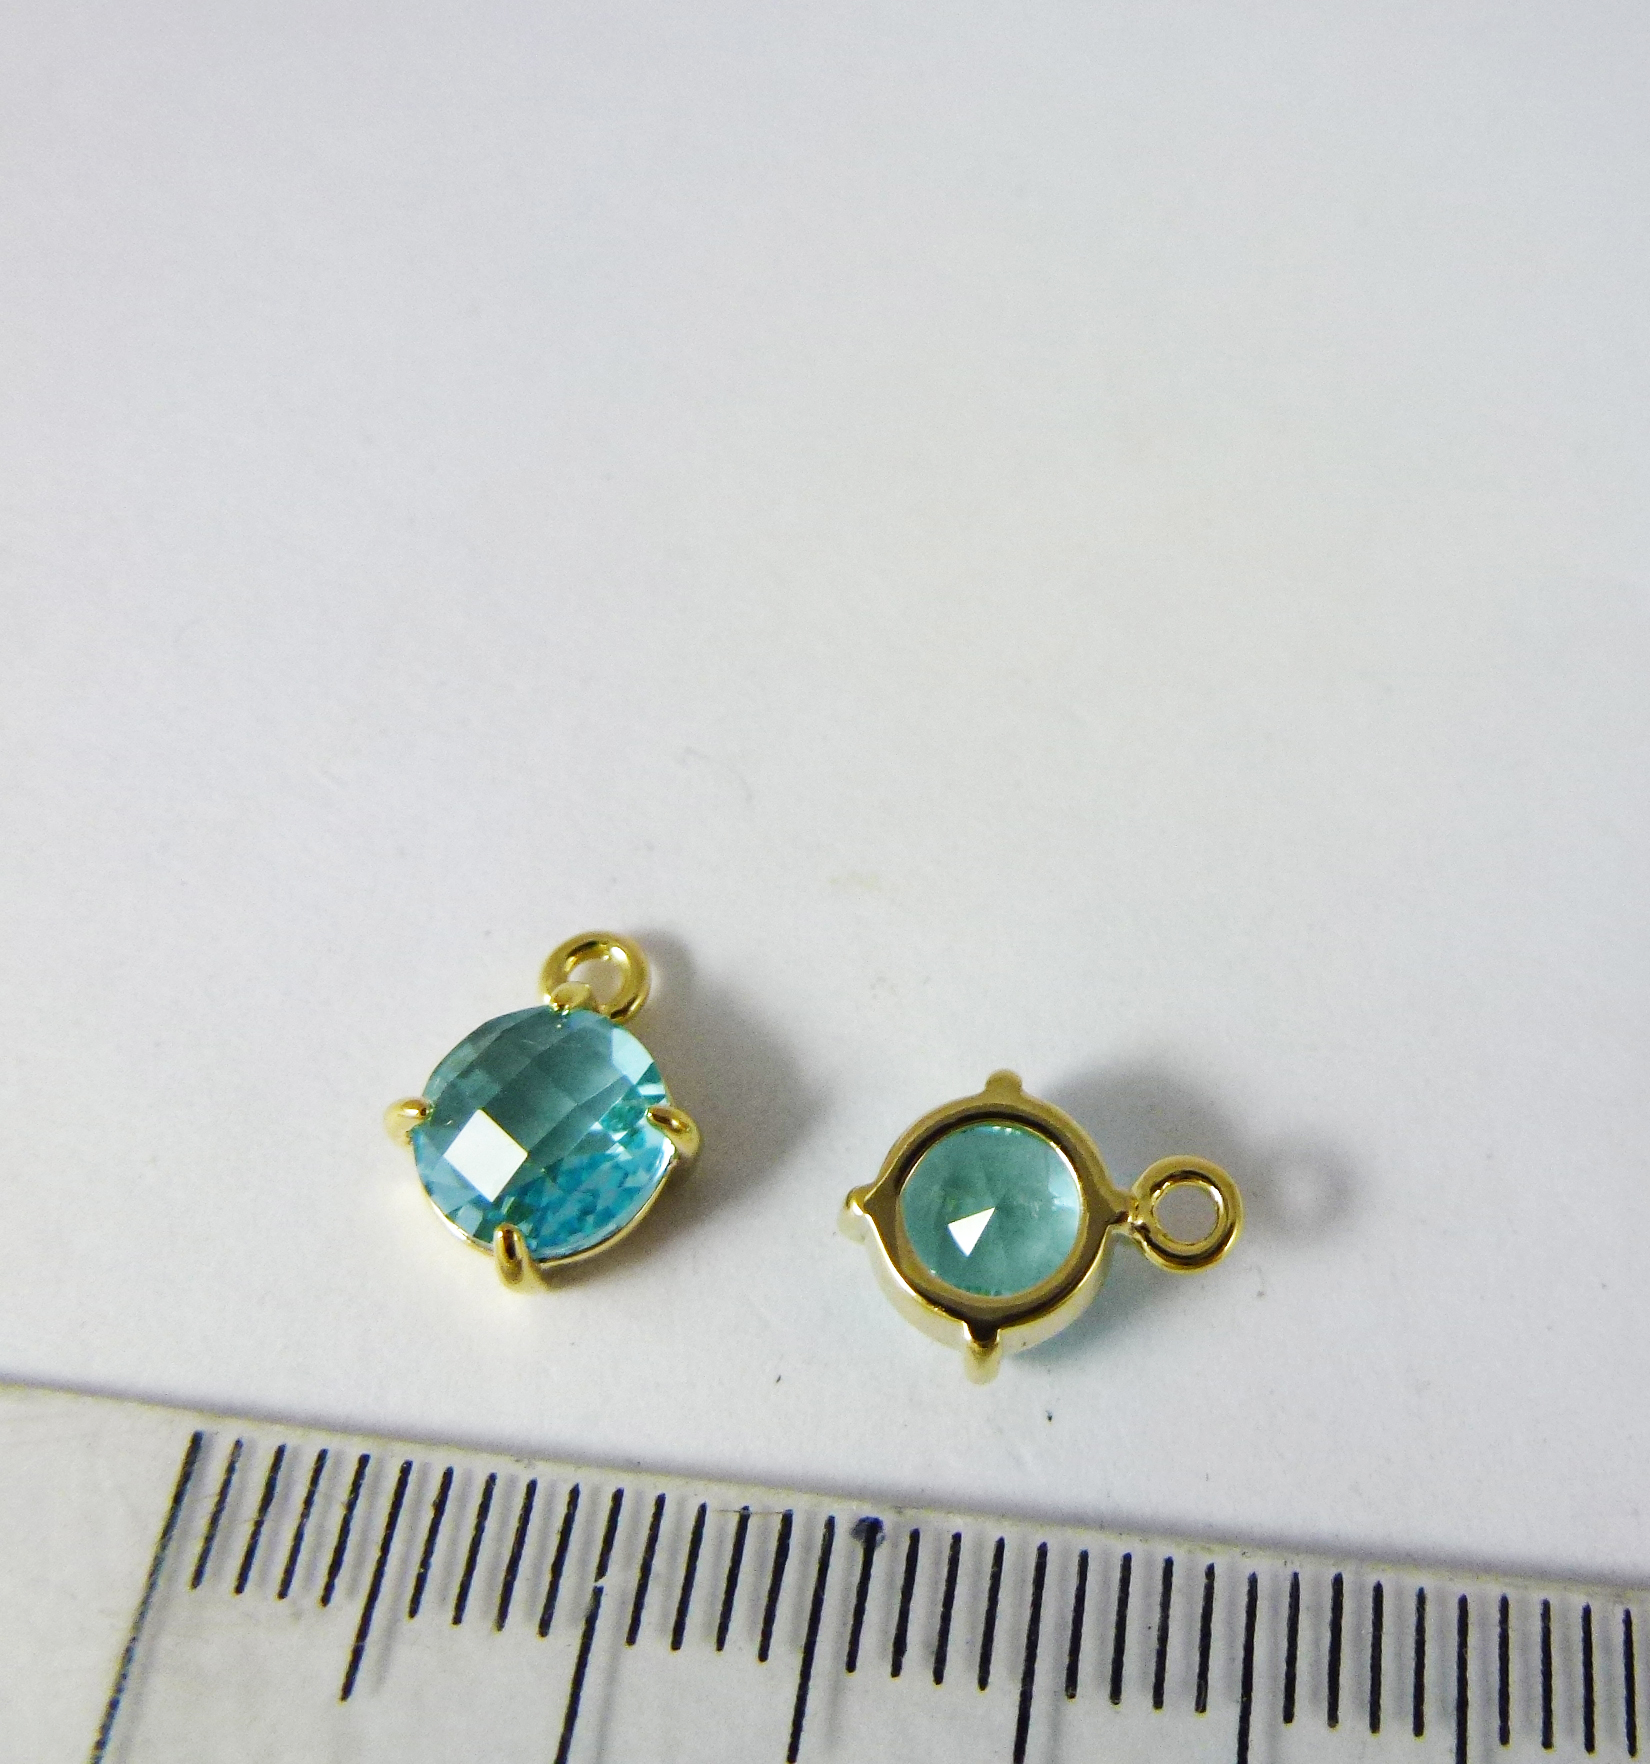 6mm銅鍍金色單孔四爪圓形誕生石-三月海藍寶